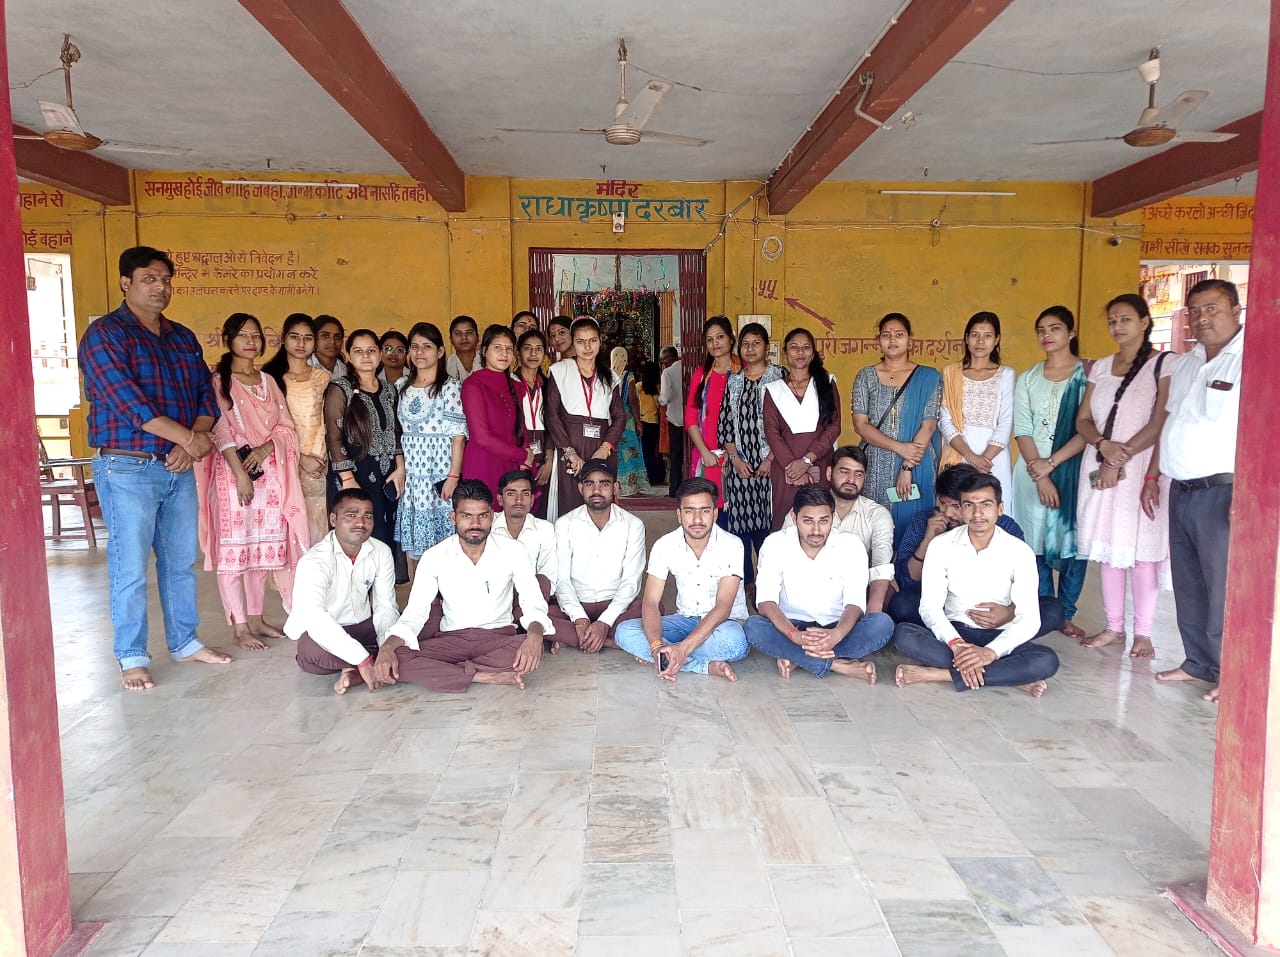 Students of Dr. Ram Manohar Lohia Post Graduate College, Allipur, Hardoi took an educational tour under the guidance of teachers.